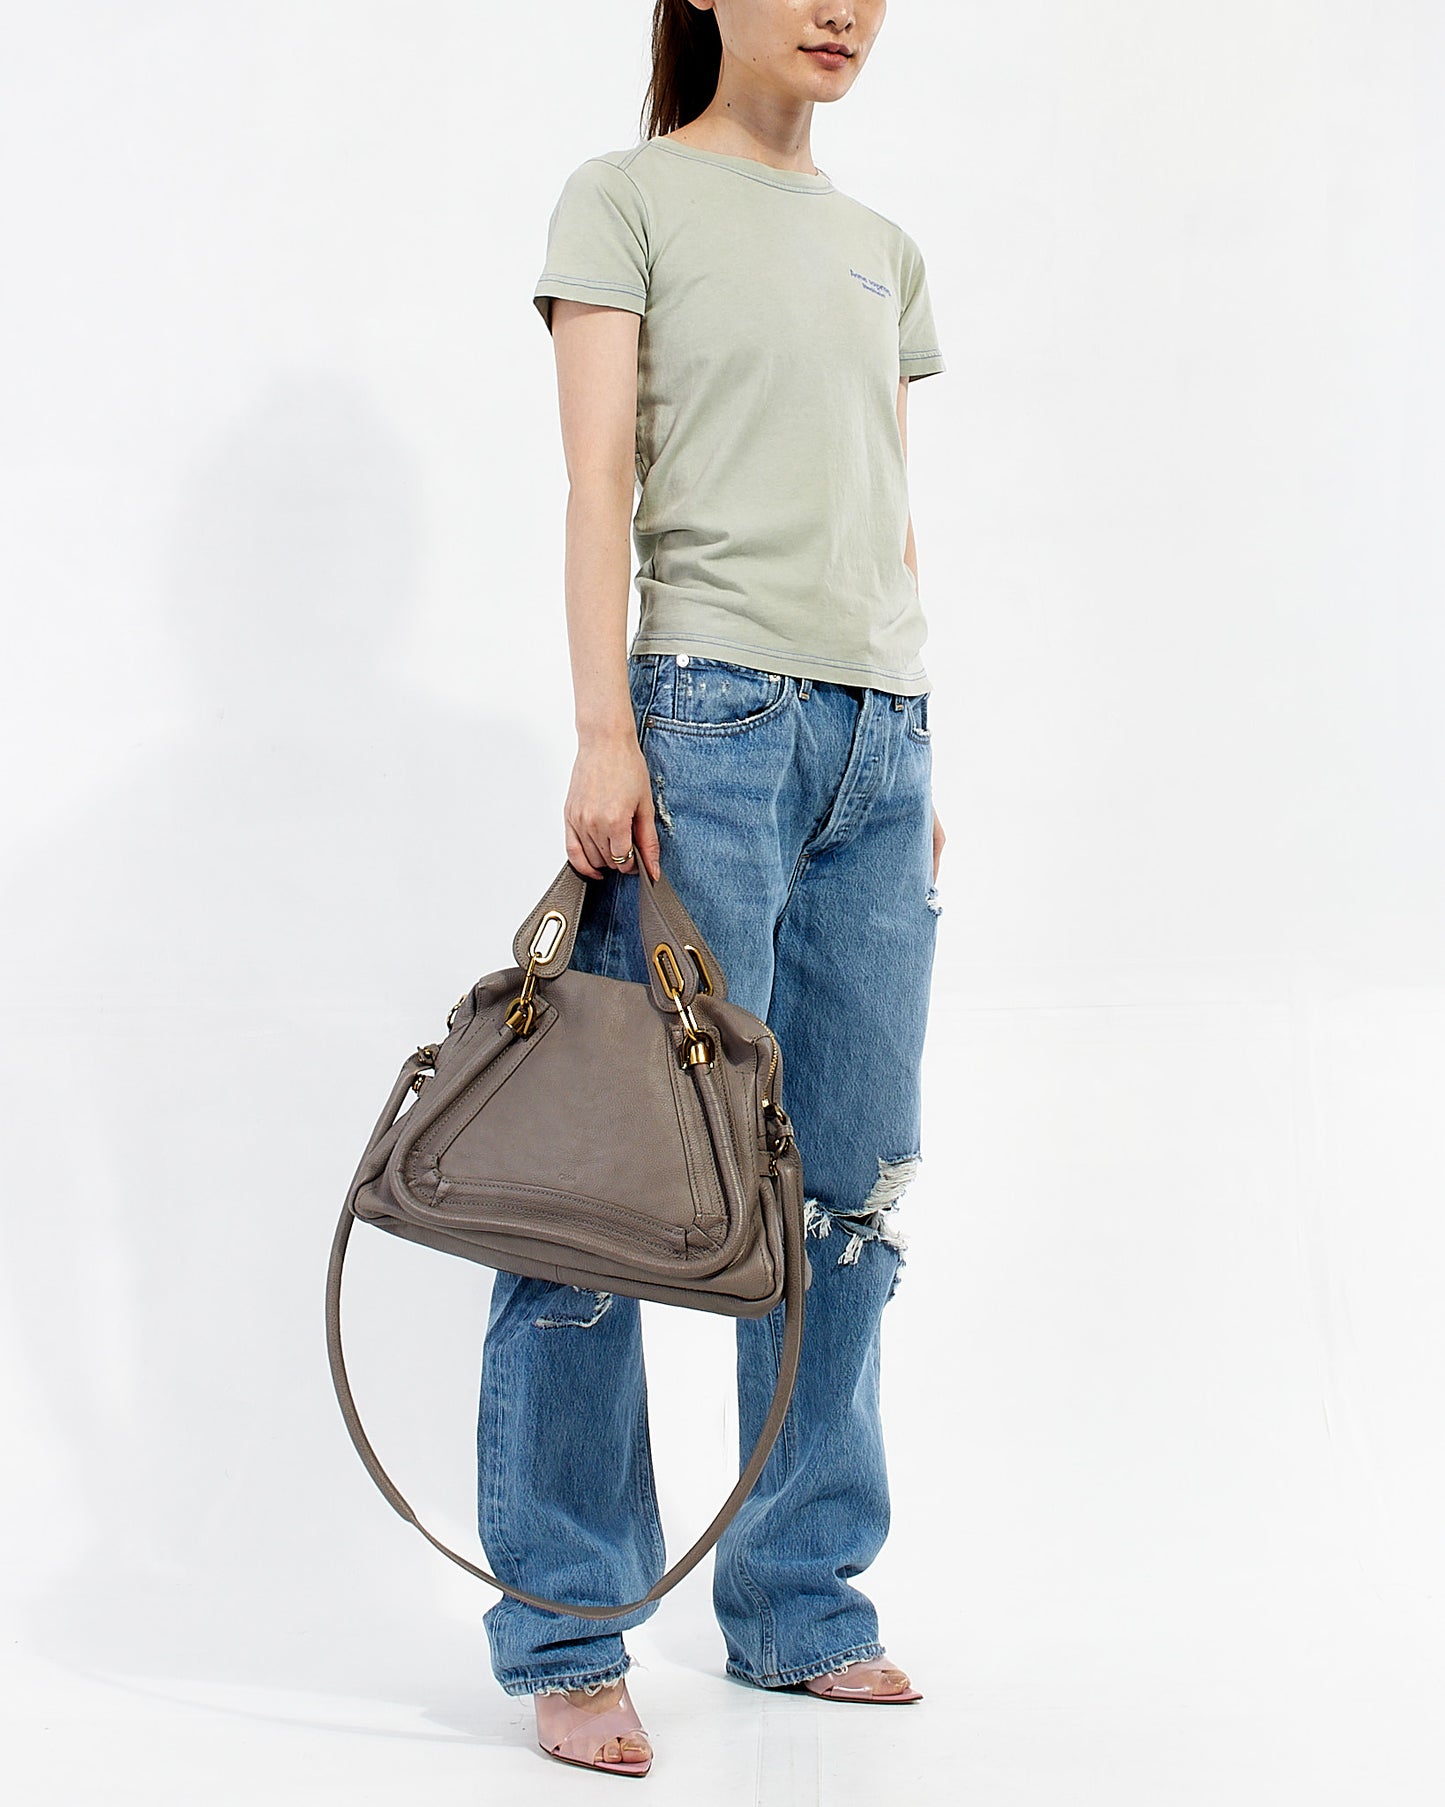 Chloé Grey Leather Medium Paraty Shoulder Bag